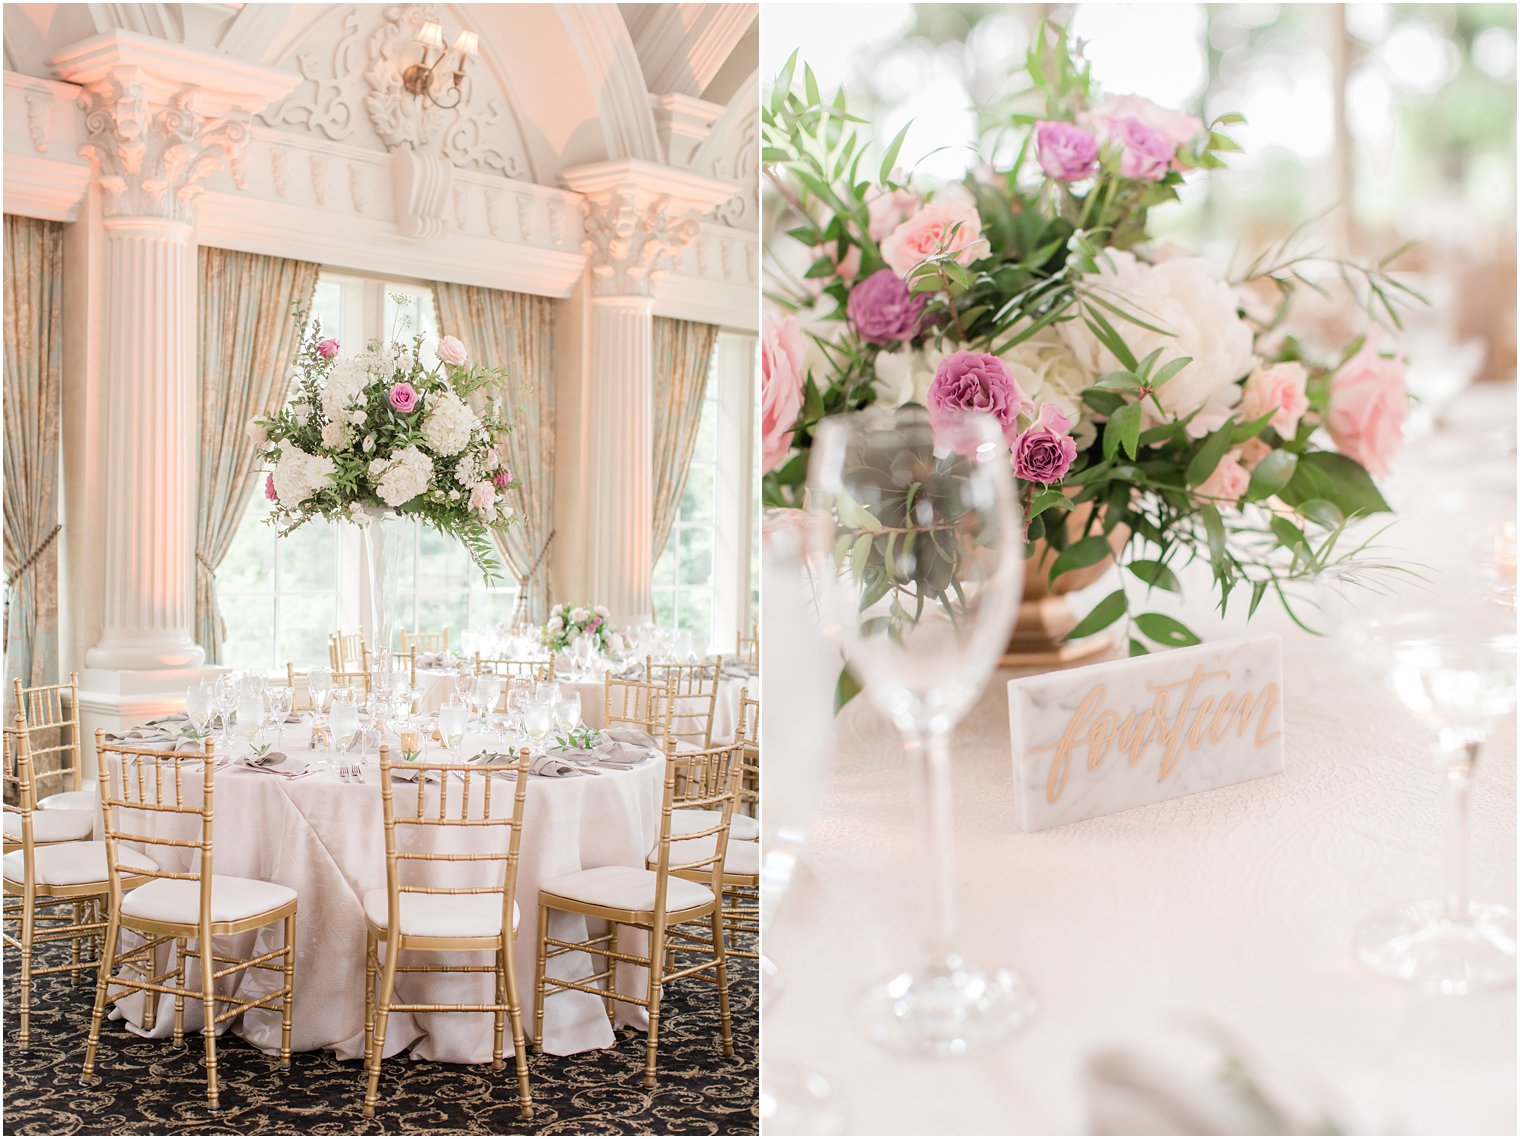 Wedding reception details at The Ashford Estate